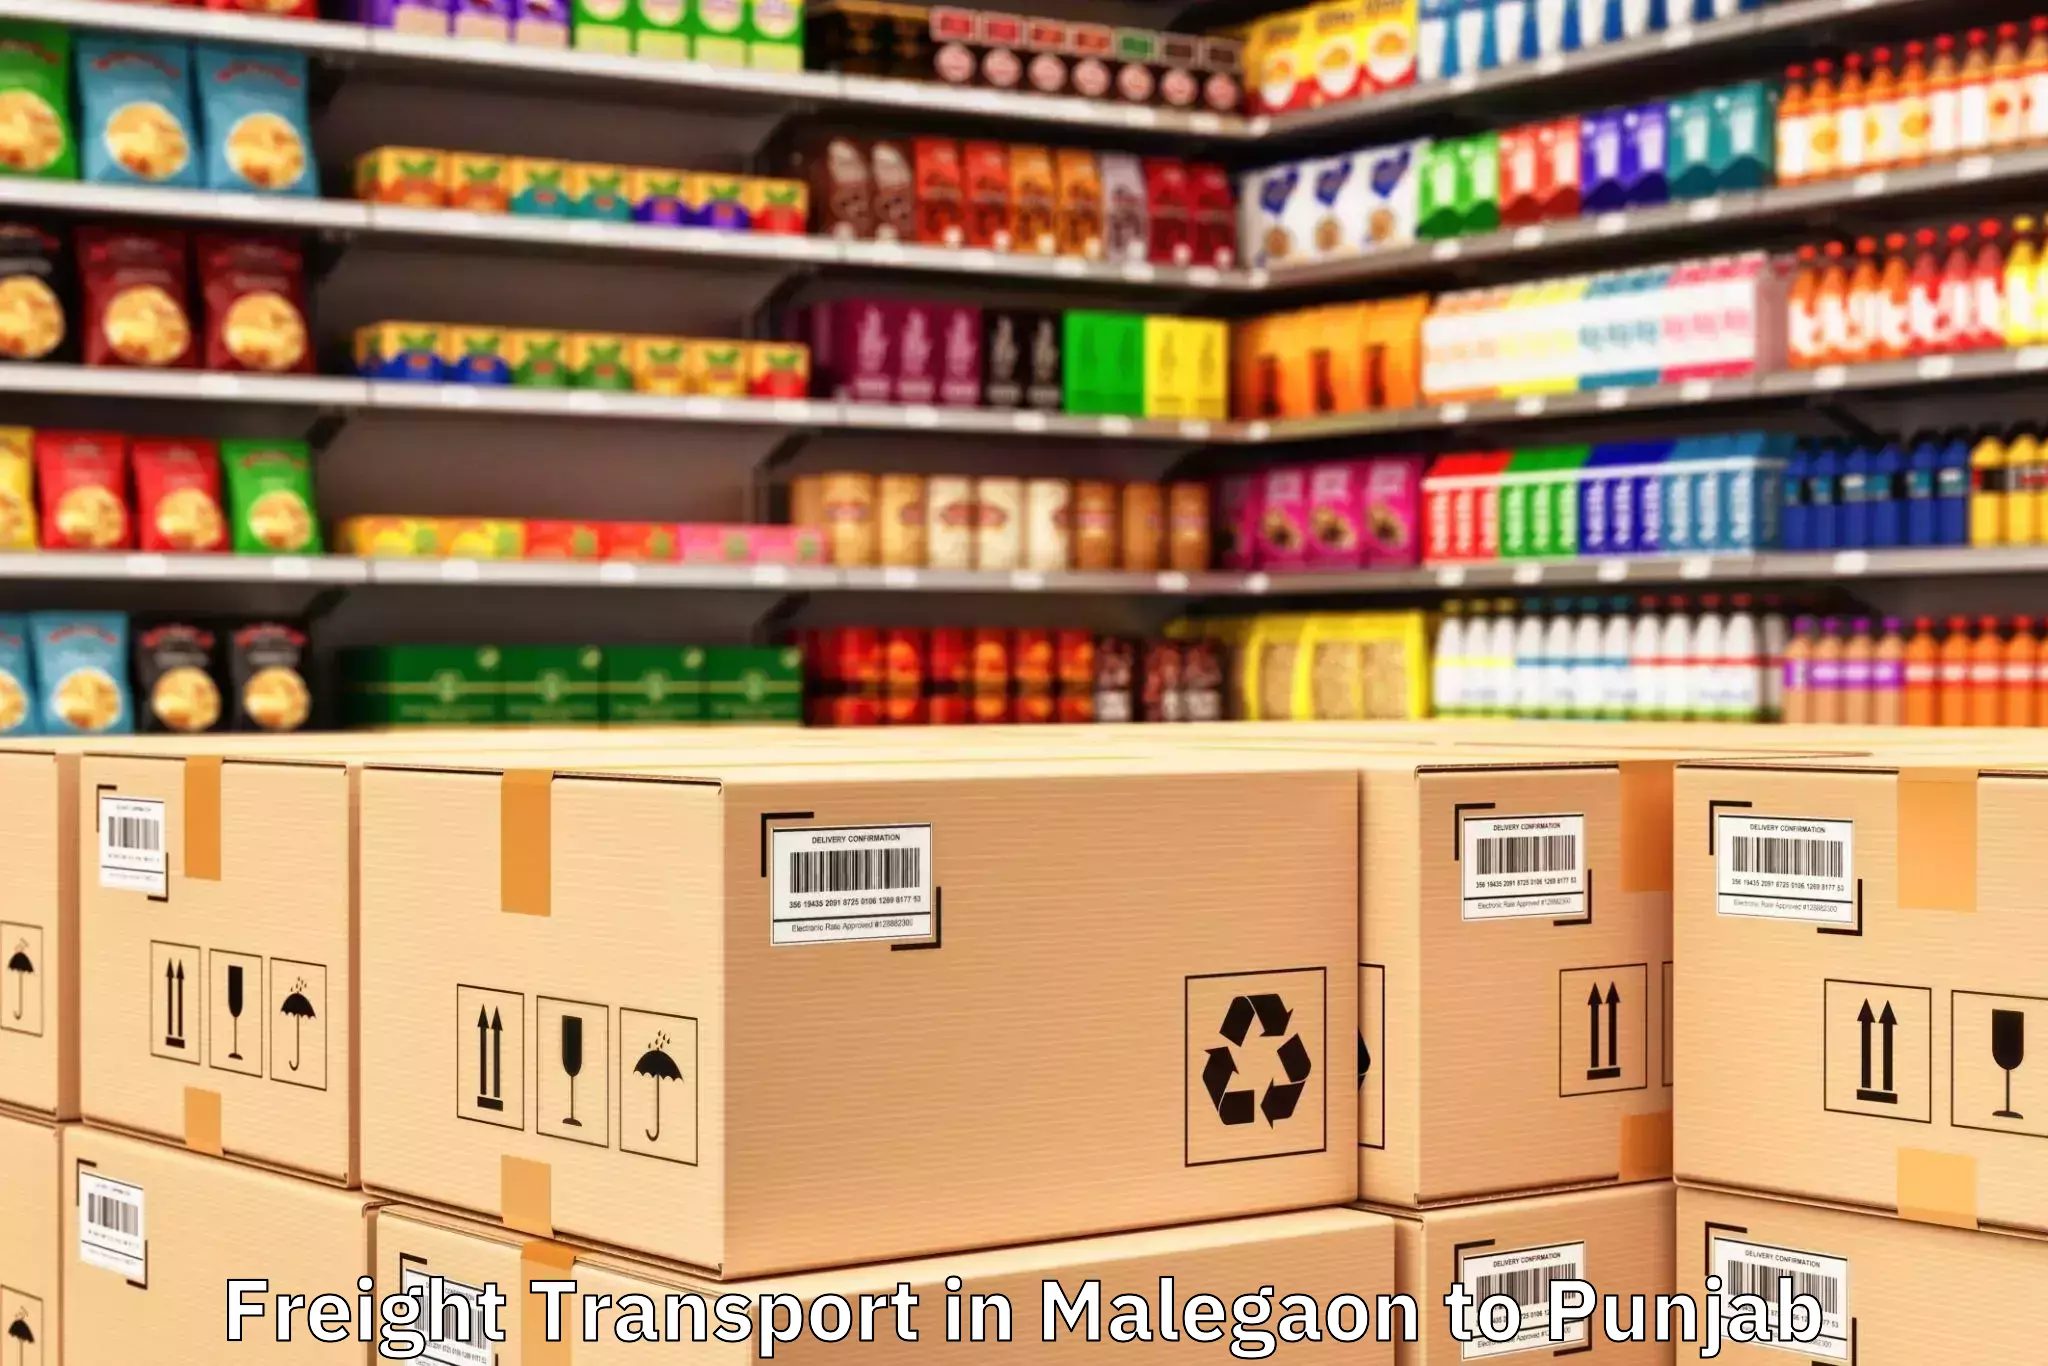 Efficient Malegaon to Punjab Freight Transport